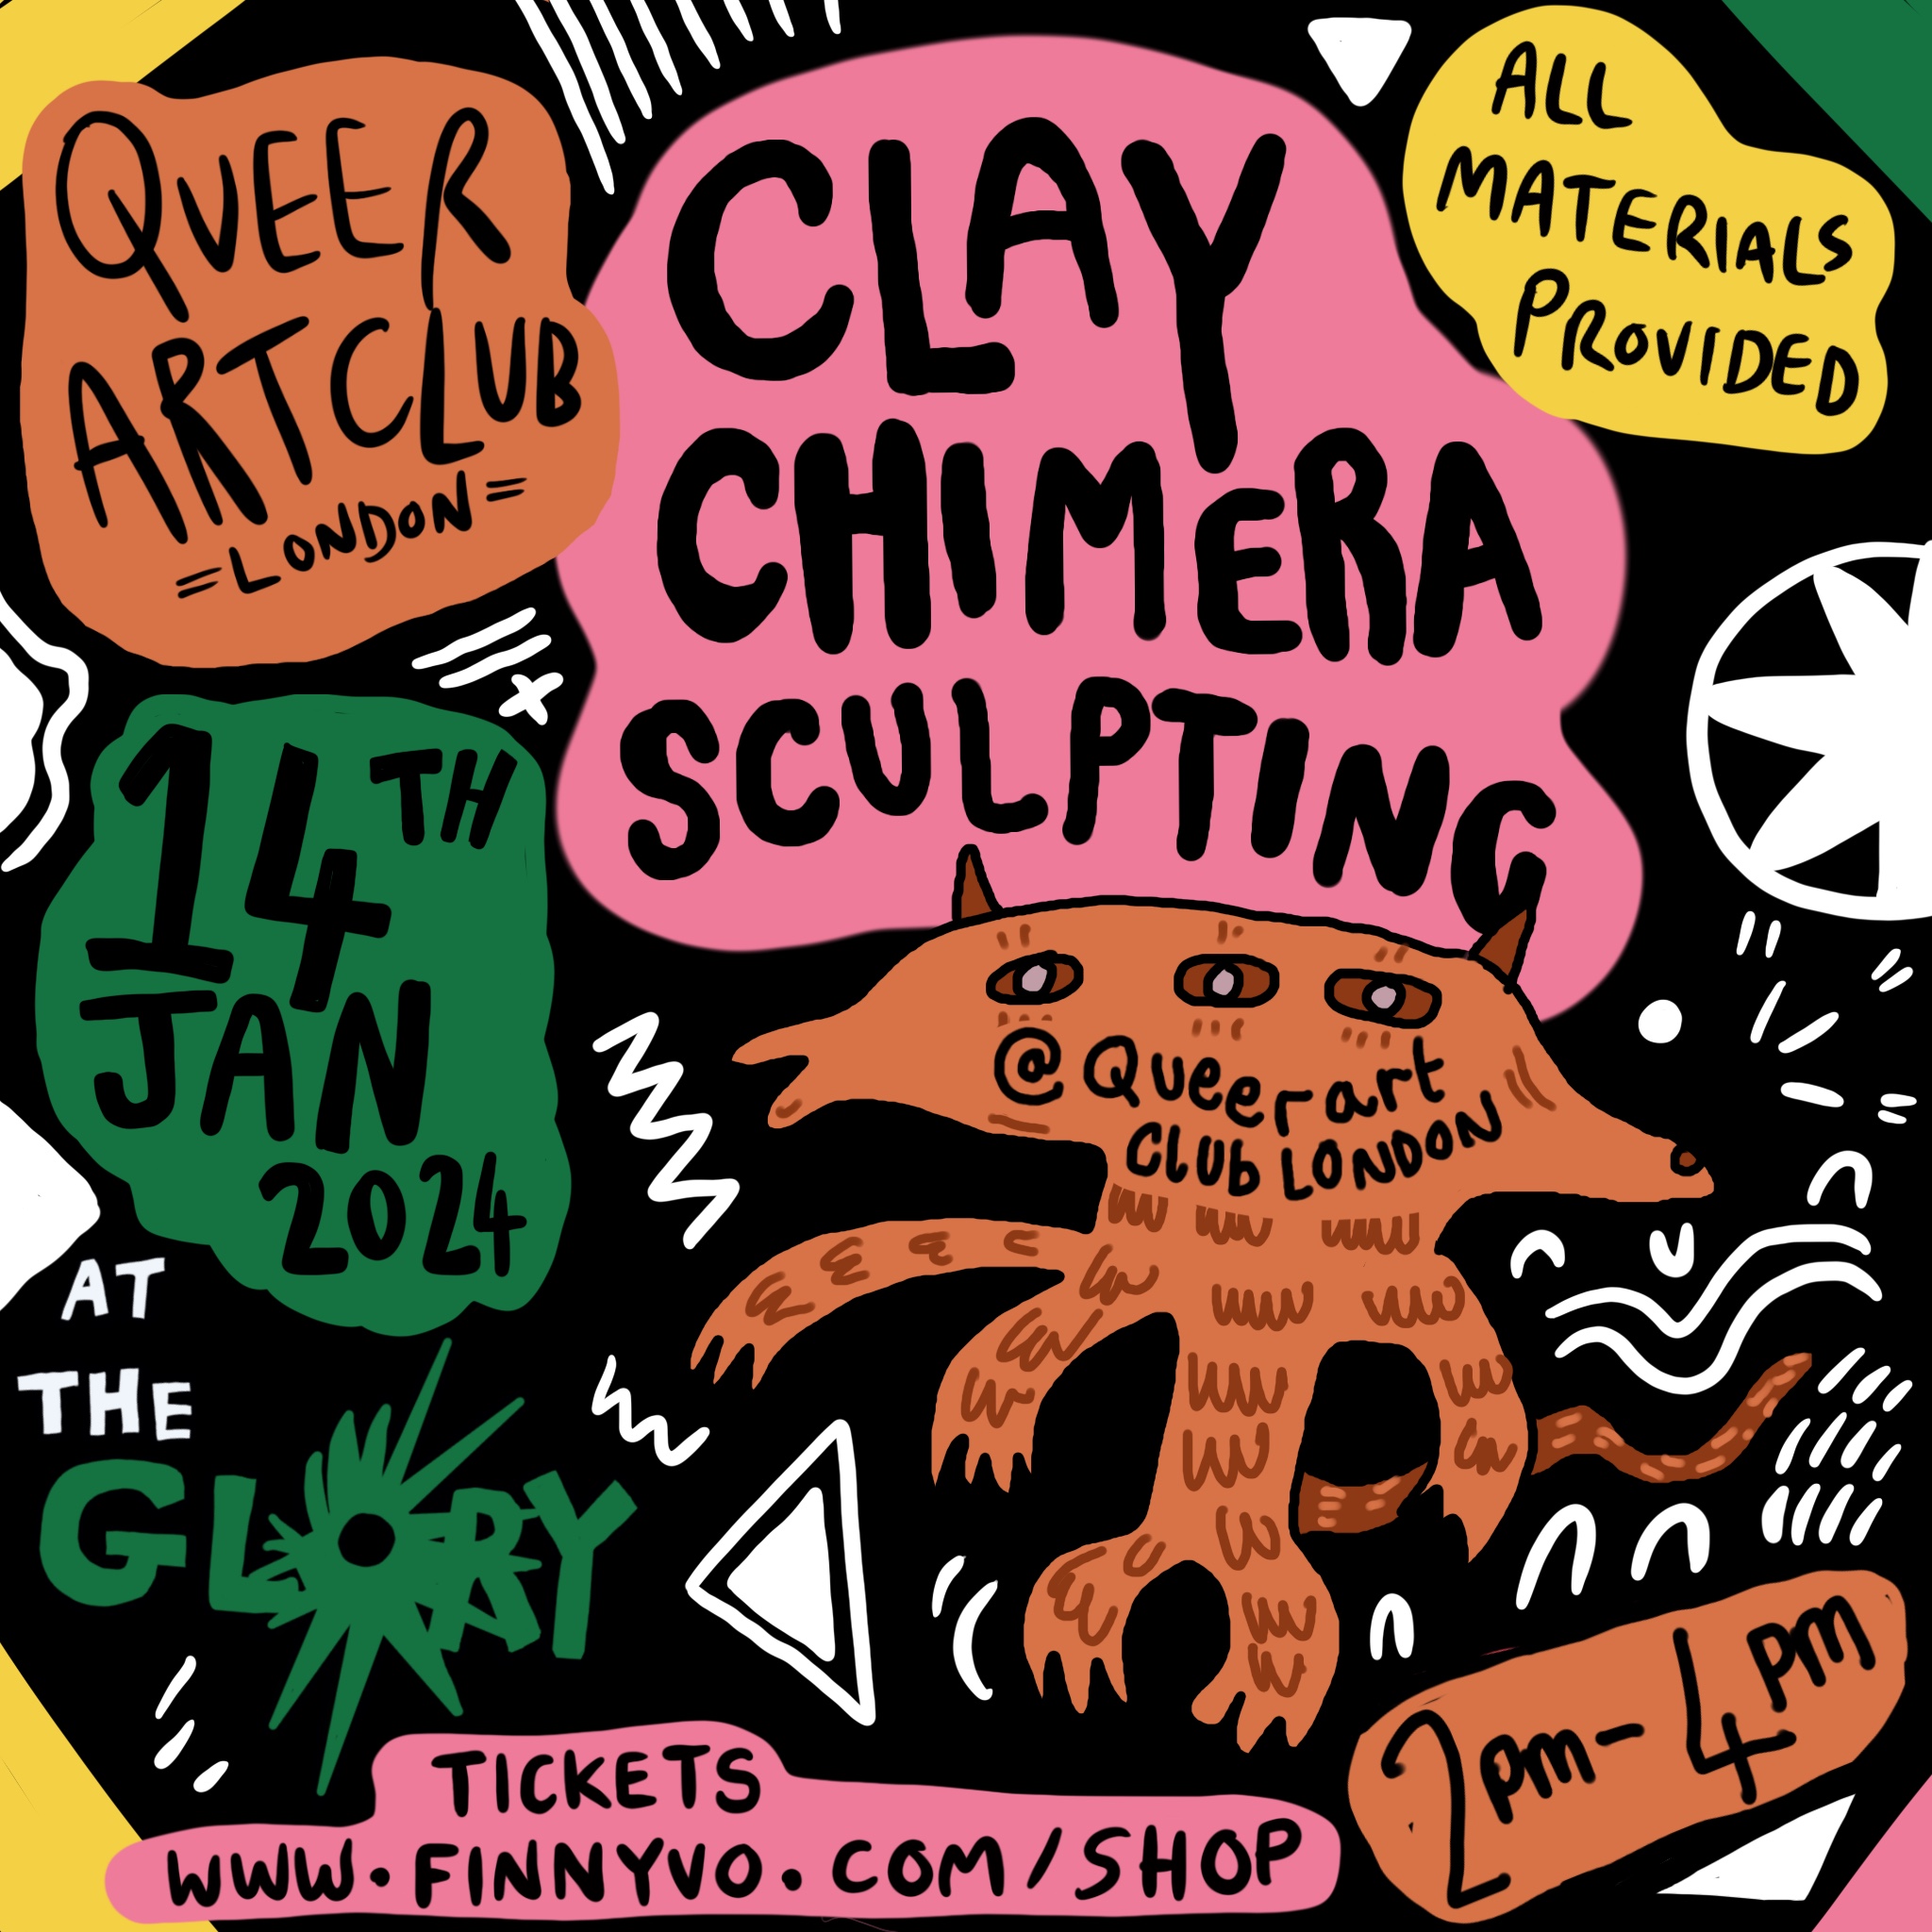 ART: Queer Art Club – Clay Chimera Sculpting